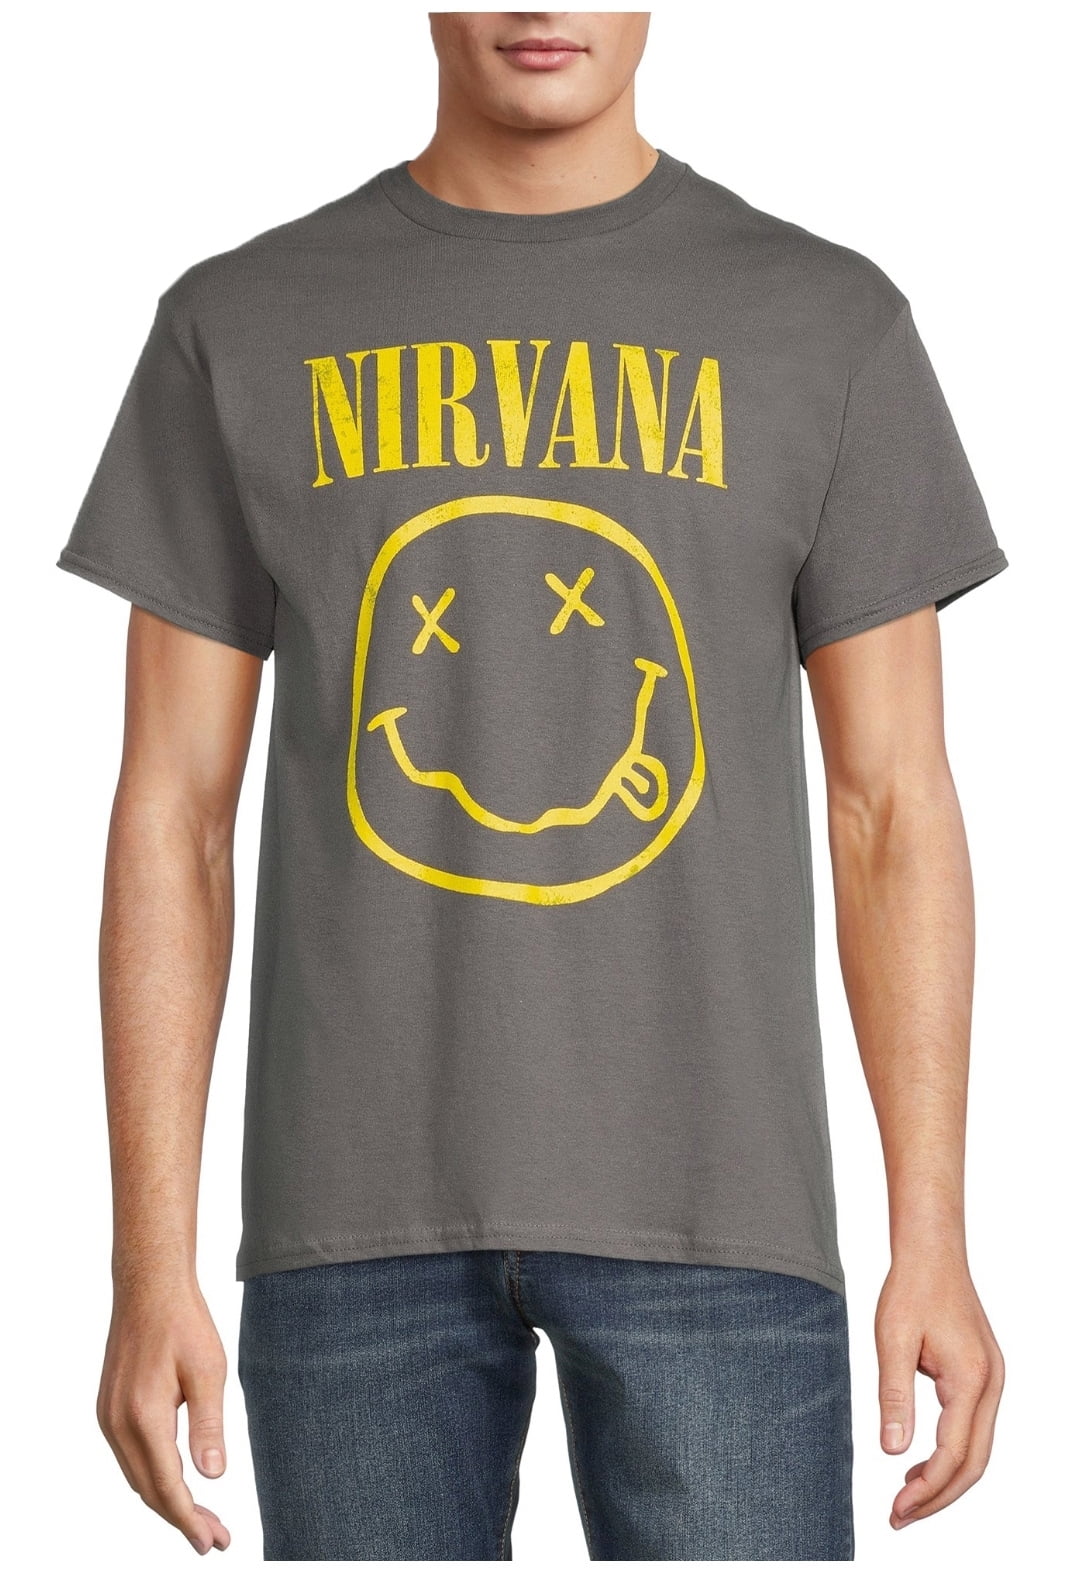 jury eskortere lav lektier Nirvana Smiley Charcoal Gray Graphic T-Shirt - 2XL - Walmart.com